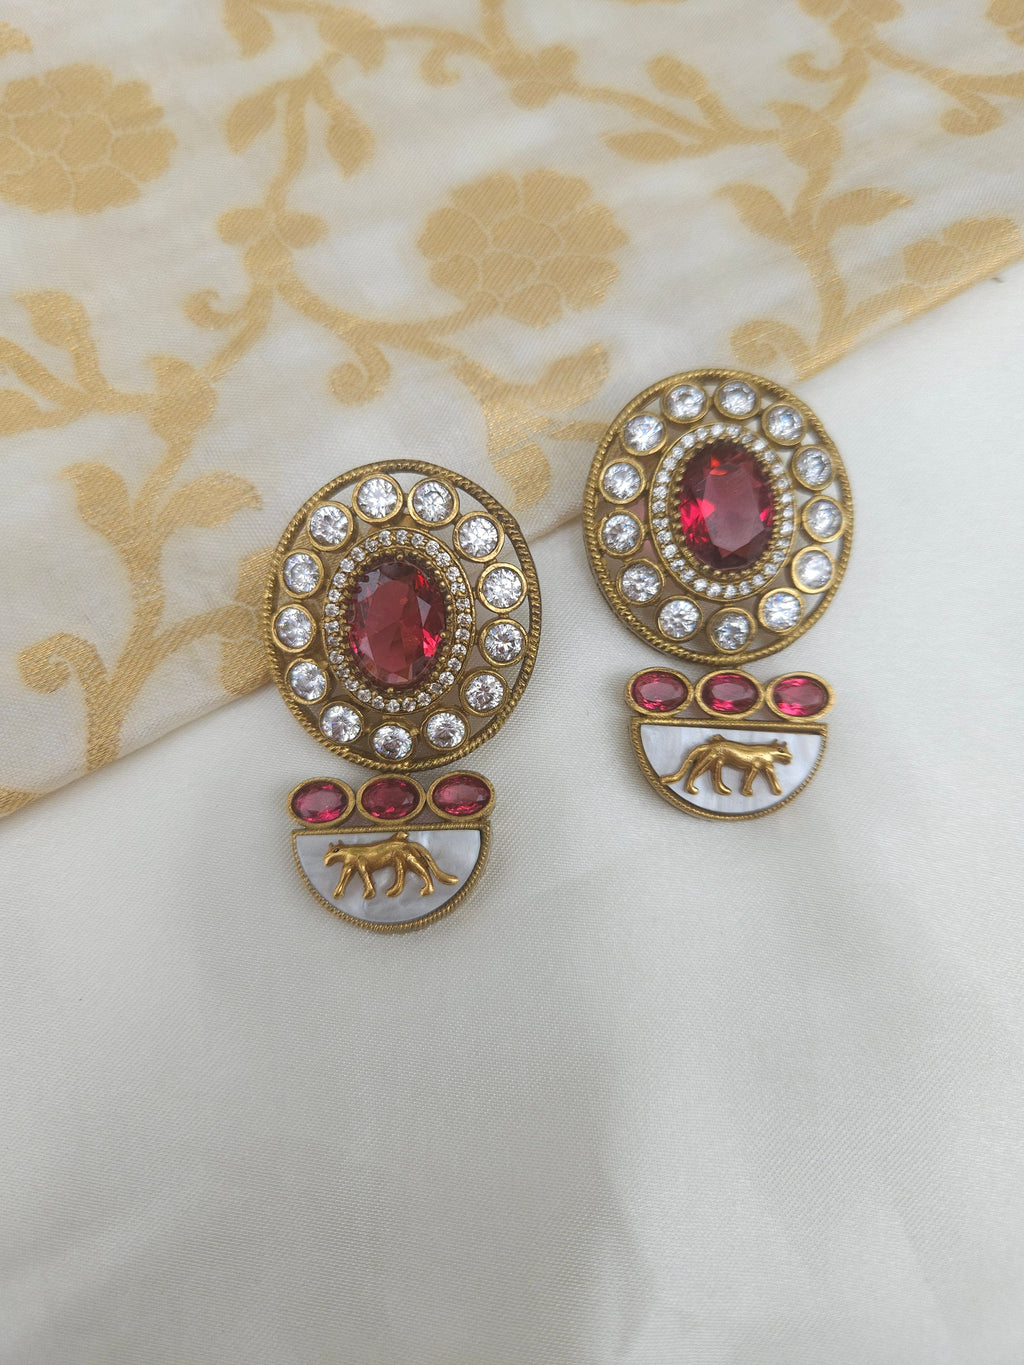 Sabyasachi inspired earrings